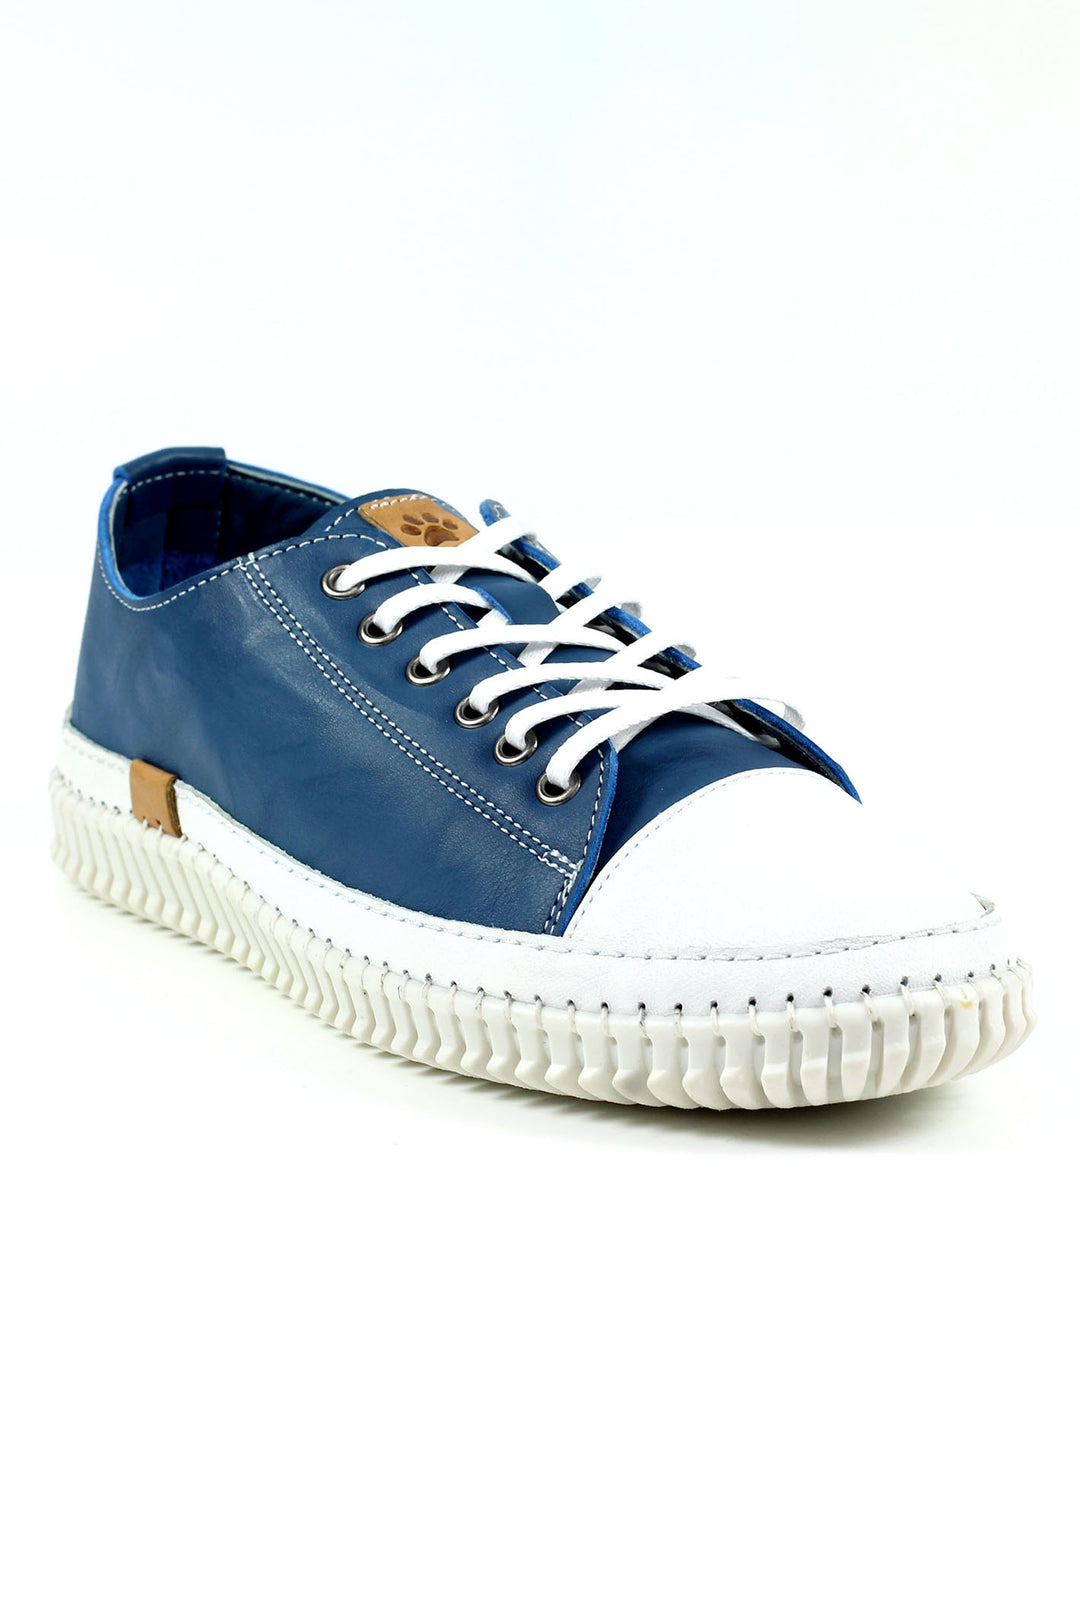 Lunar FLD105 Lazy Dogz Truffle Blue Leather Shoes - Experience Boutique